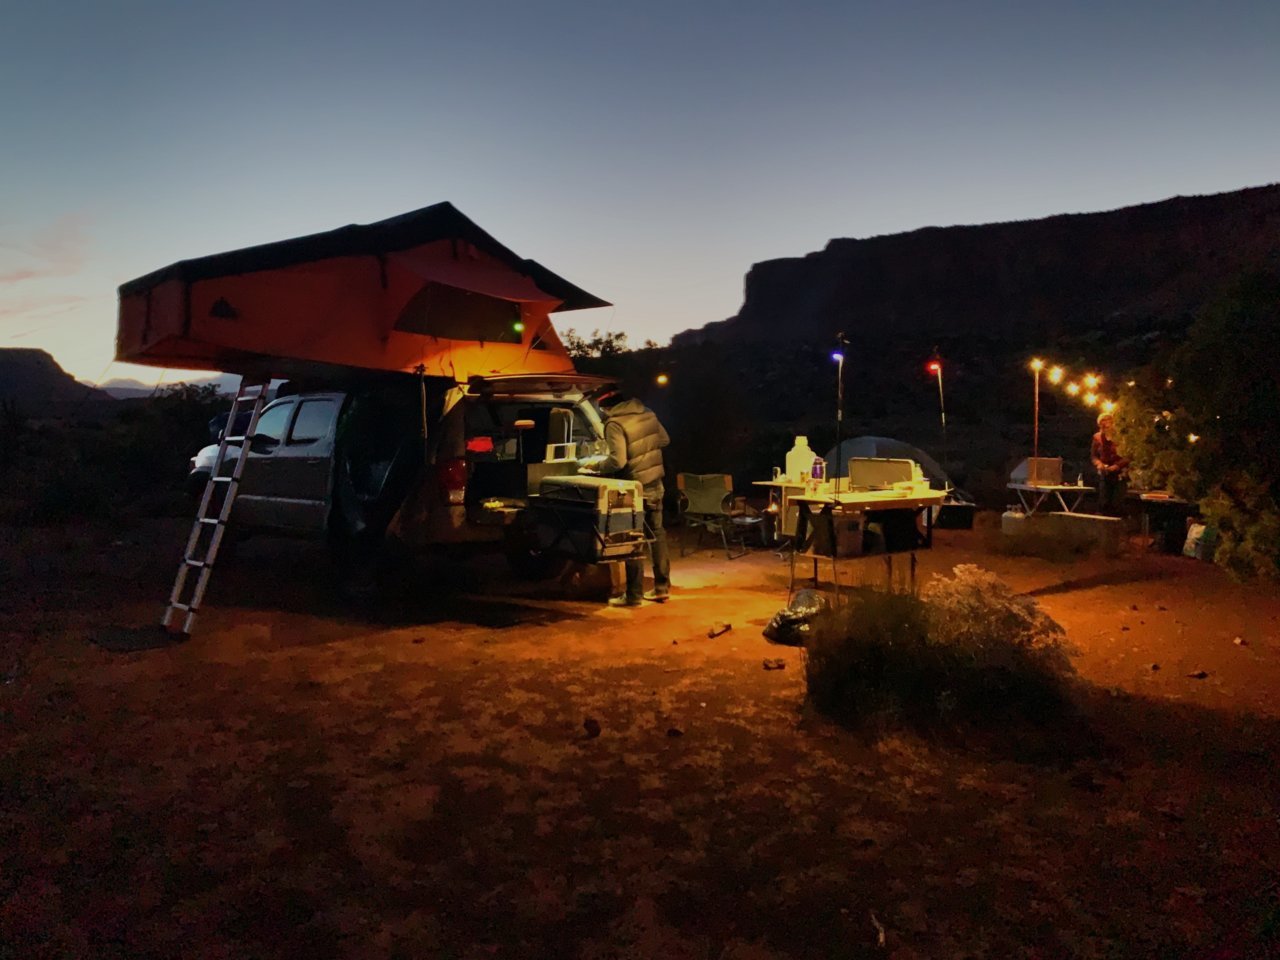 camp setup canyonlands.jpg